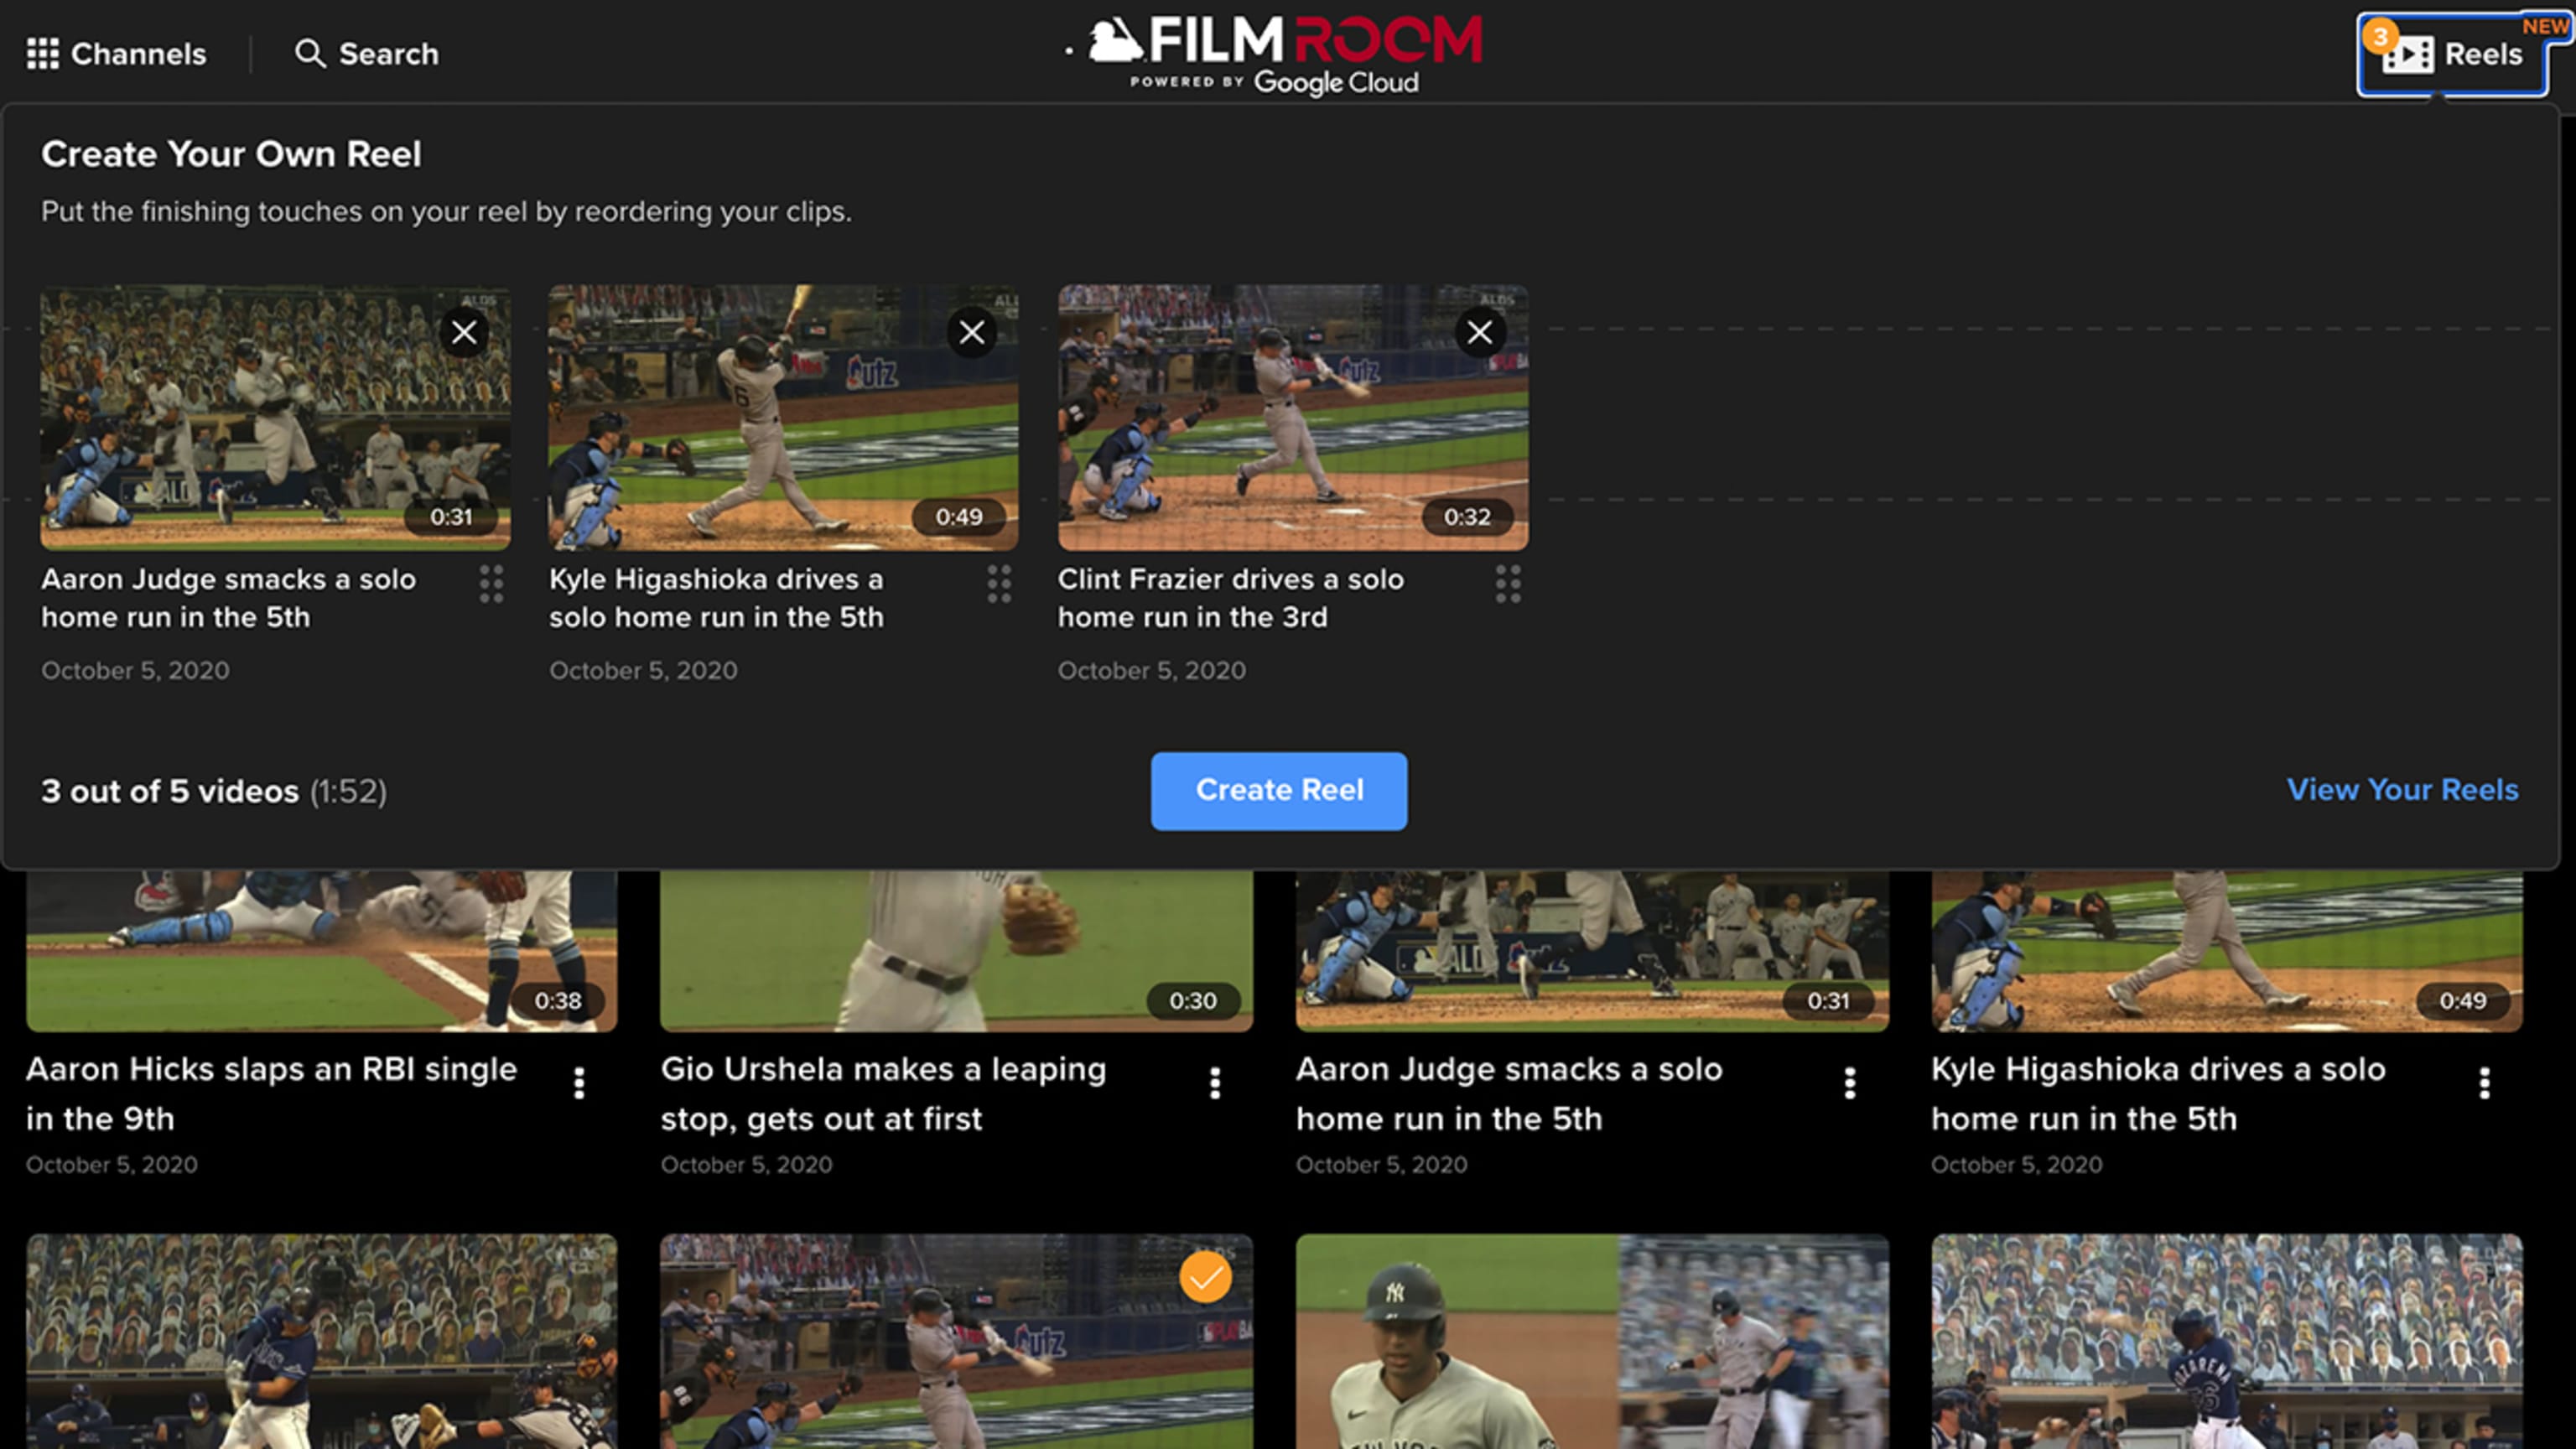 Film Room Community MLB